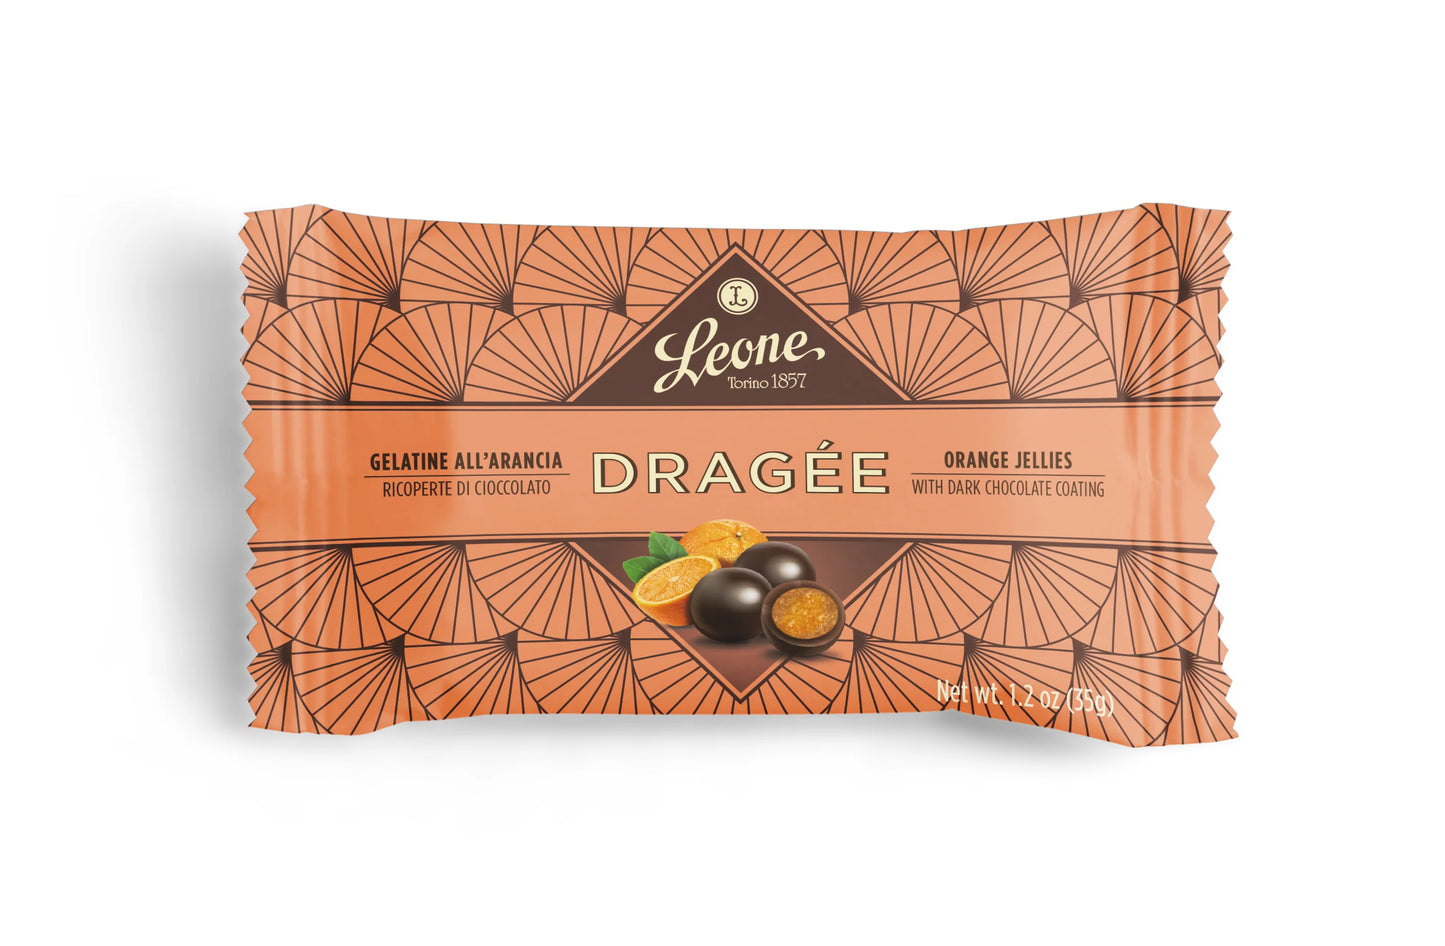 Dragée Orange Jellies covered in Chocolate